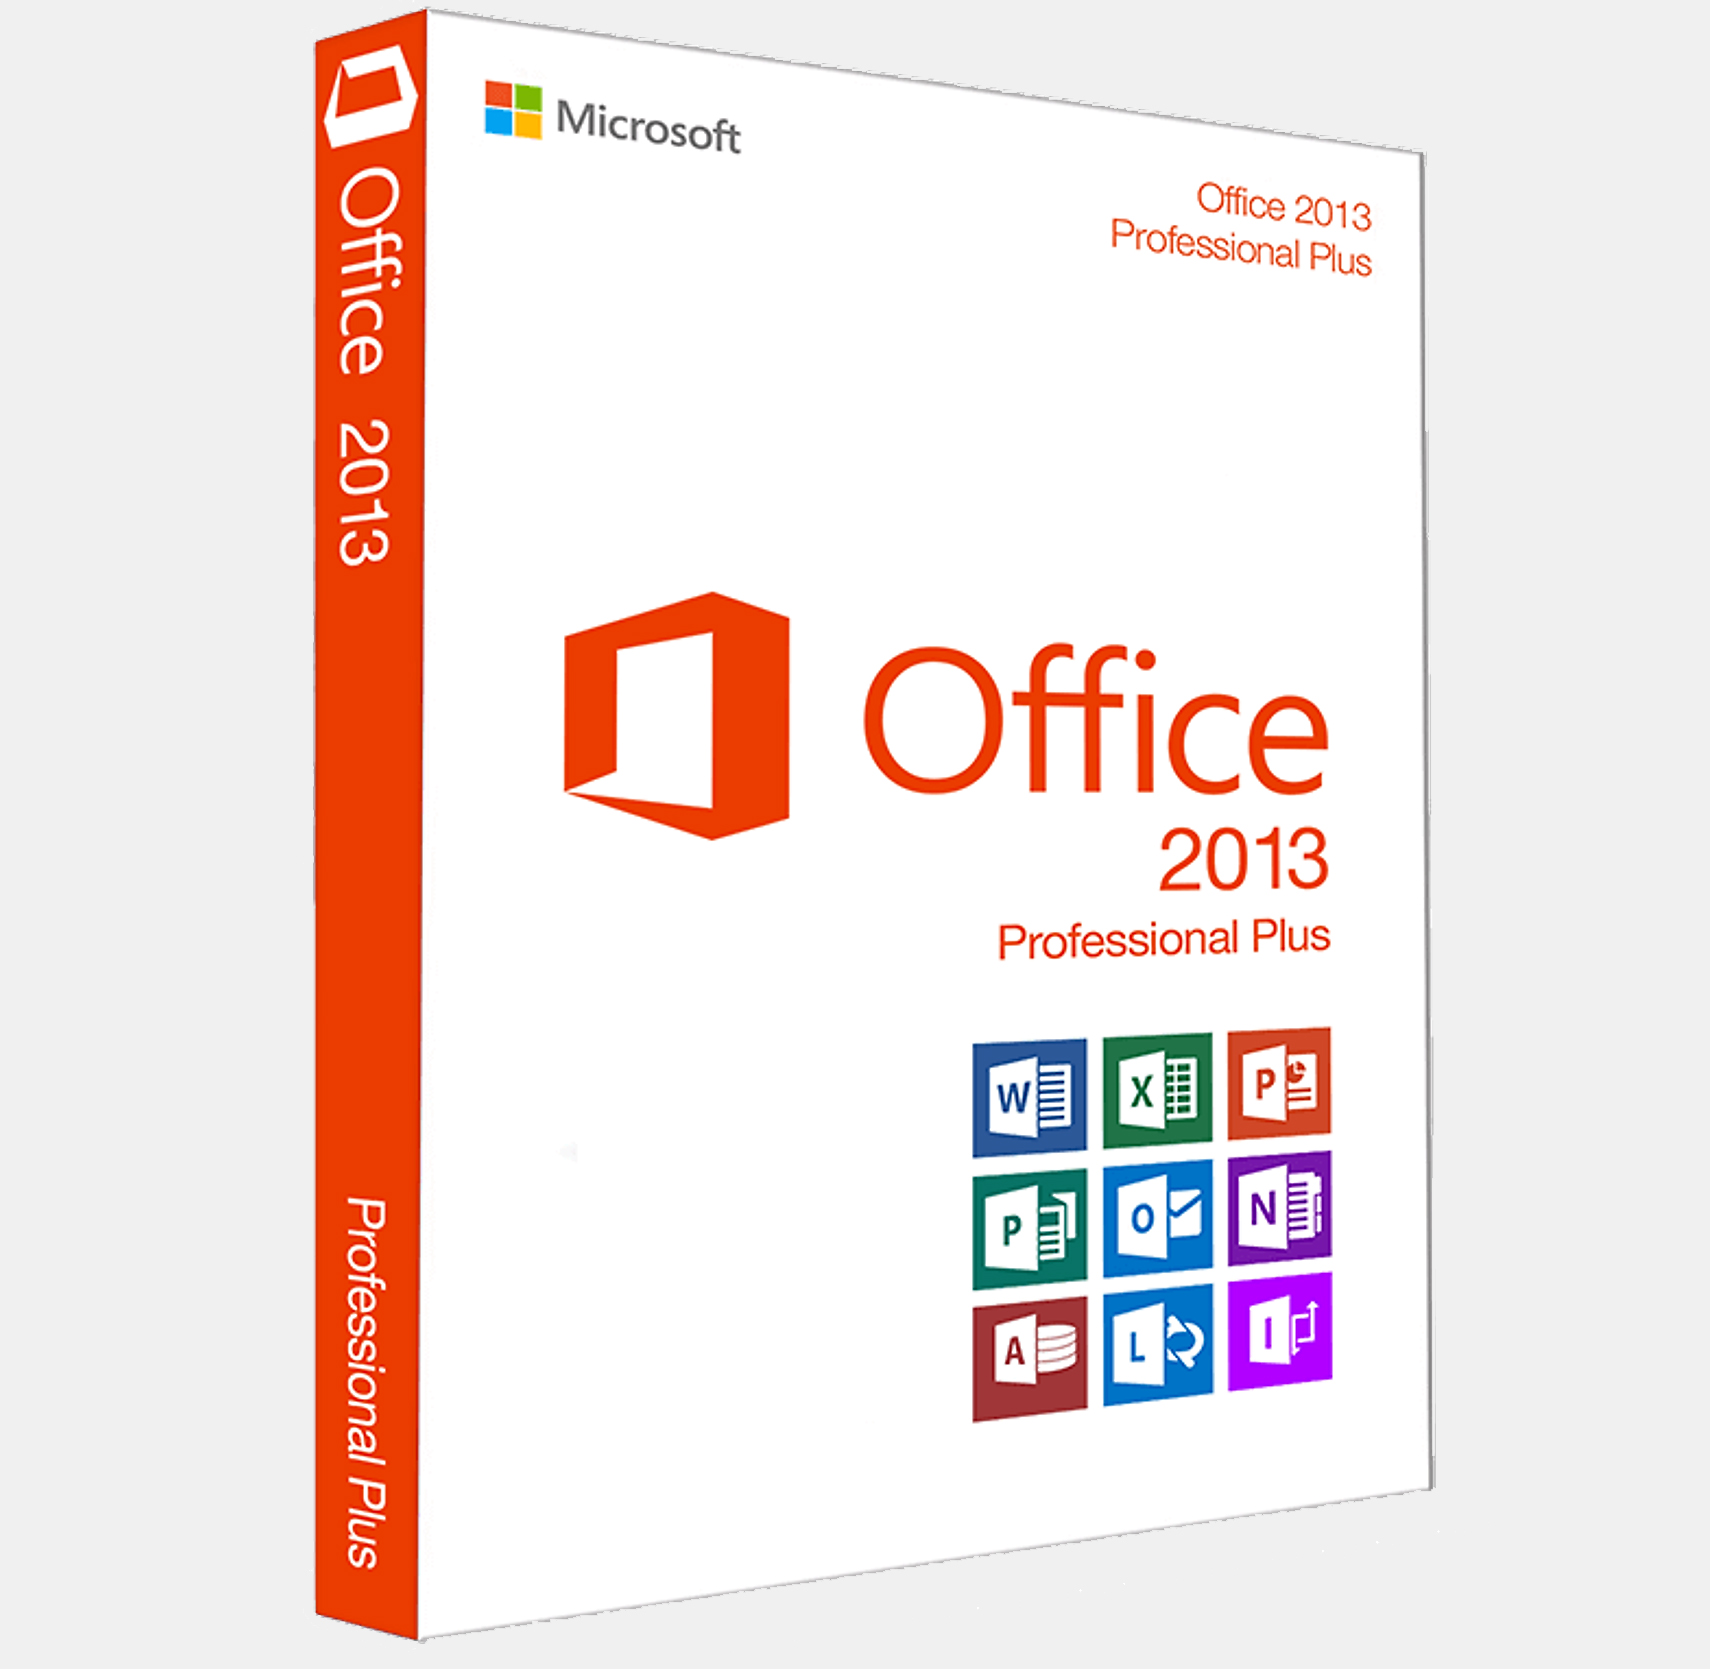 Microsoft Office Professional Plus 2013 - Bình Minh PC